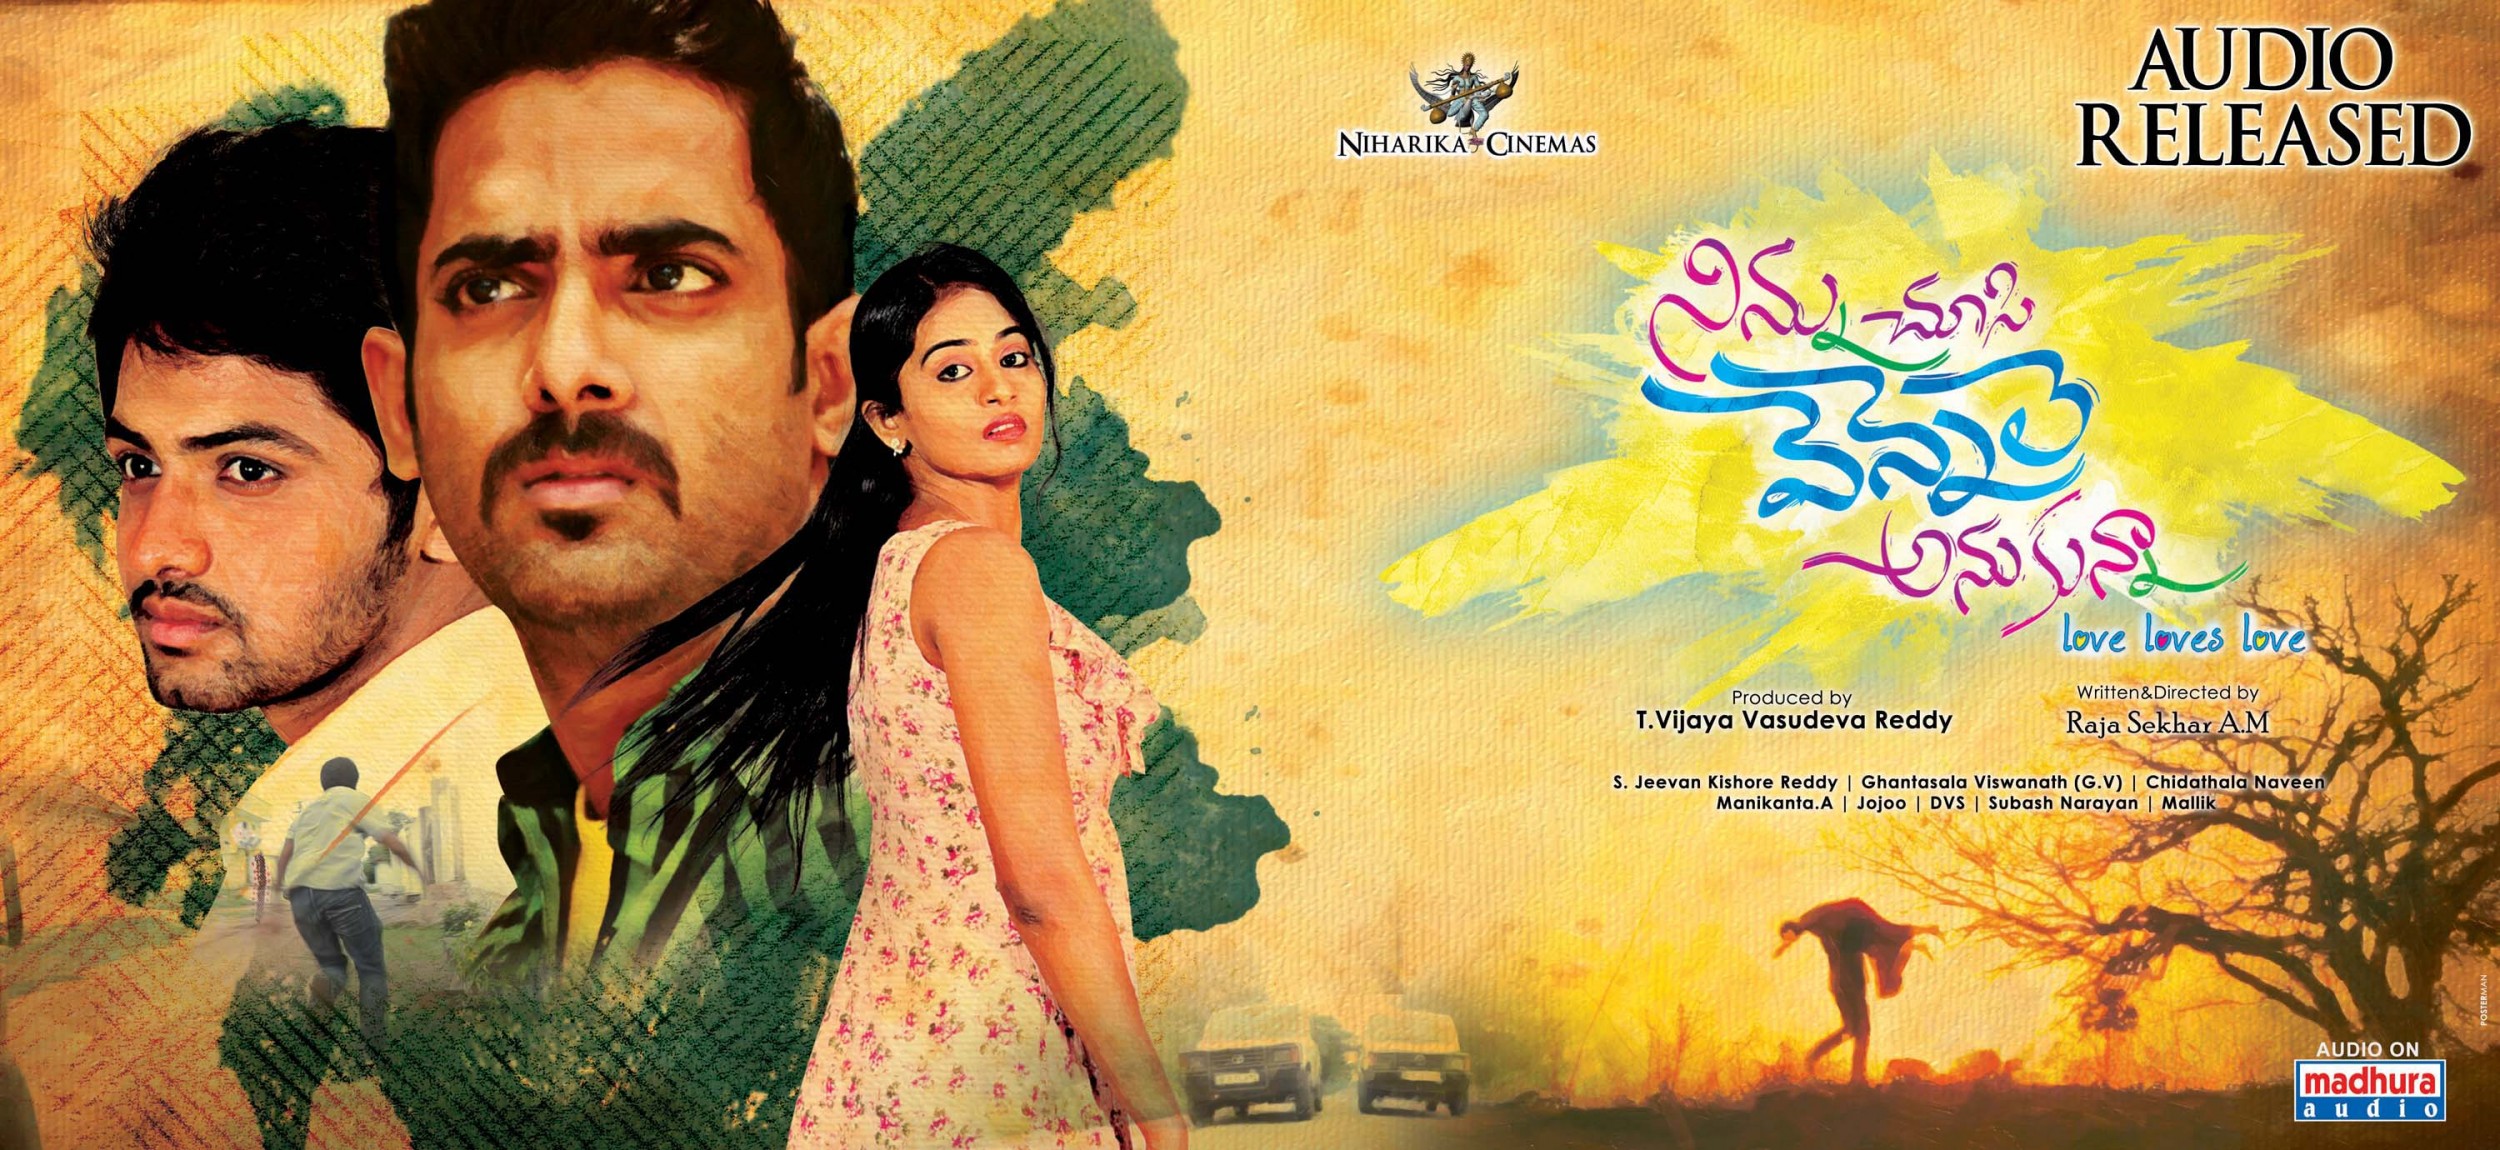 Mega Sized Movie Poster Image for Ninnu Chusi Vennele Anukunna (#7 of 7)